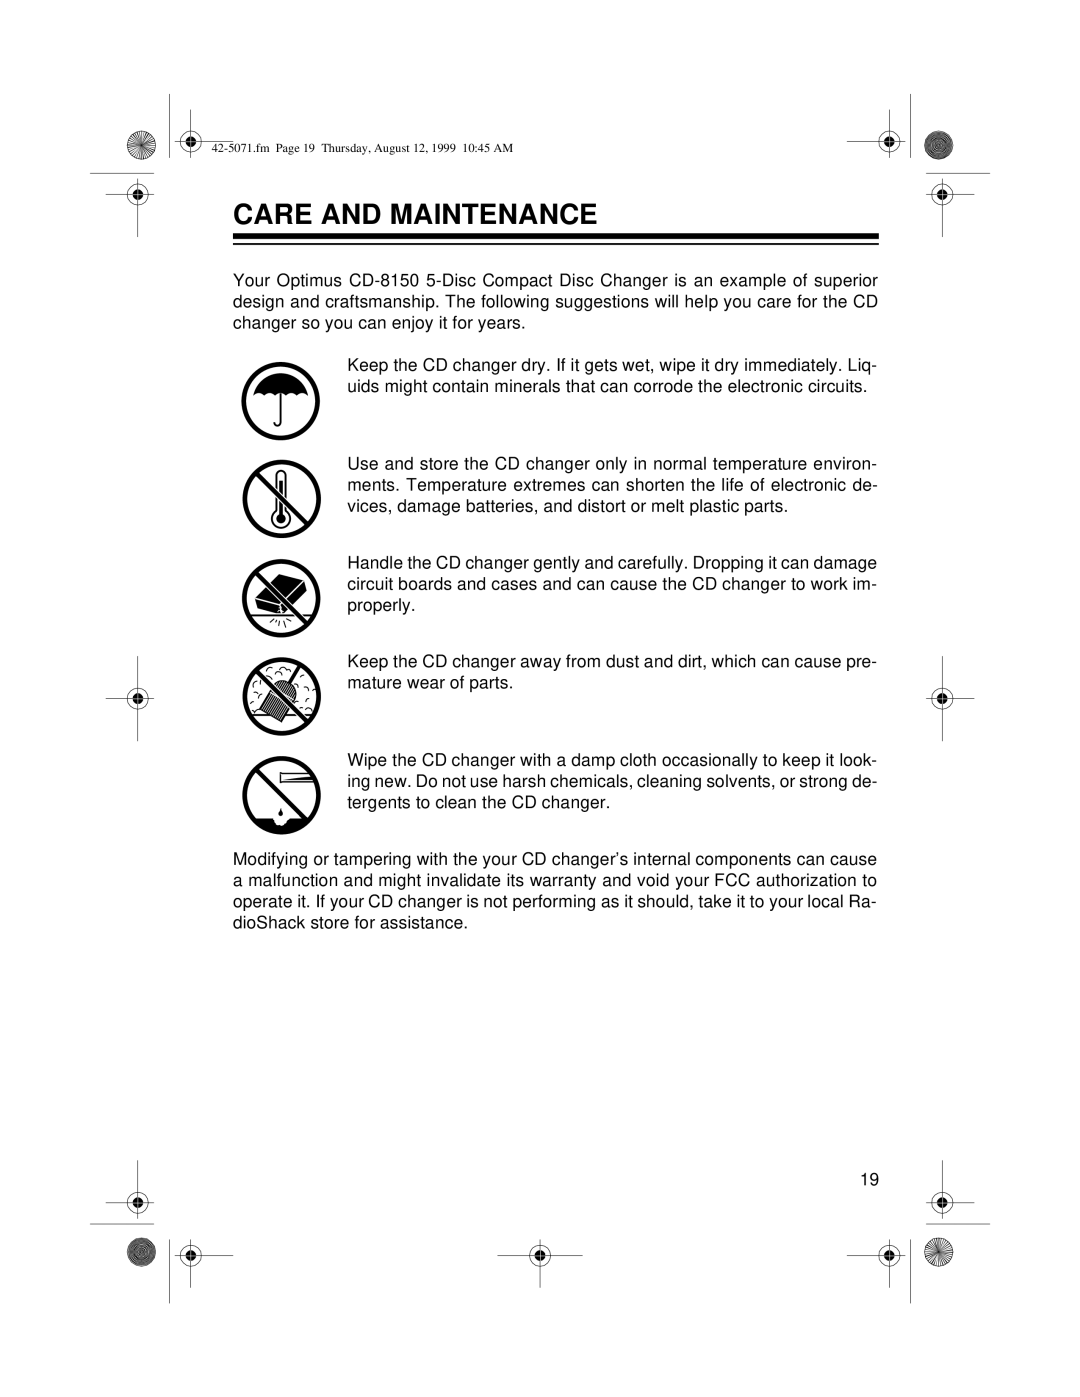 Radio Shack CD-8150 owner manual Care And Maintenance 